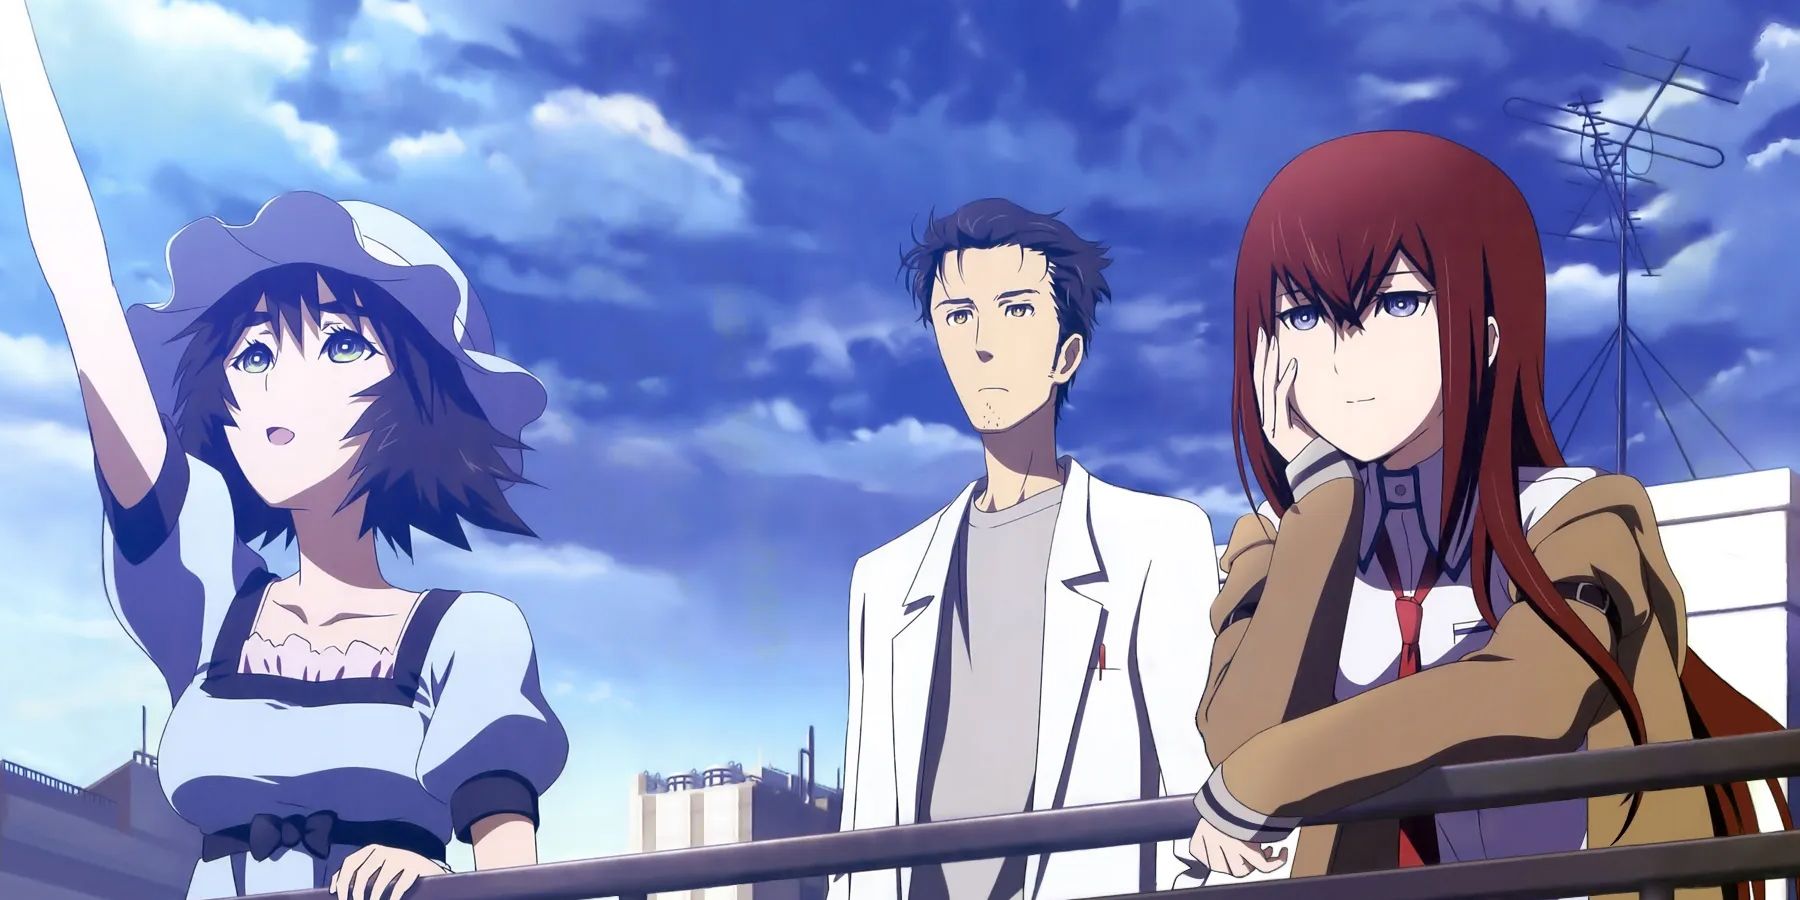 Okabe, Mayuri, and Kurisu in the Steins Gate anime